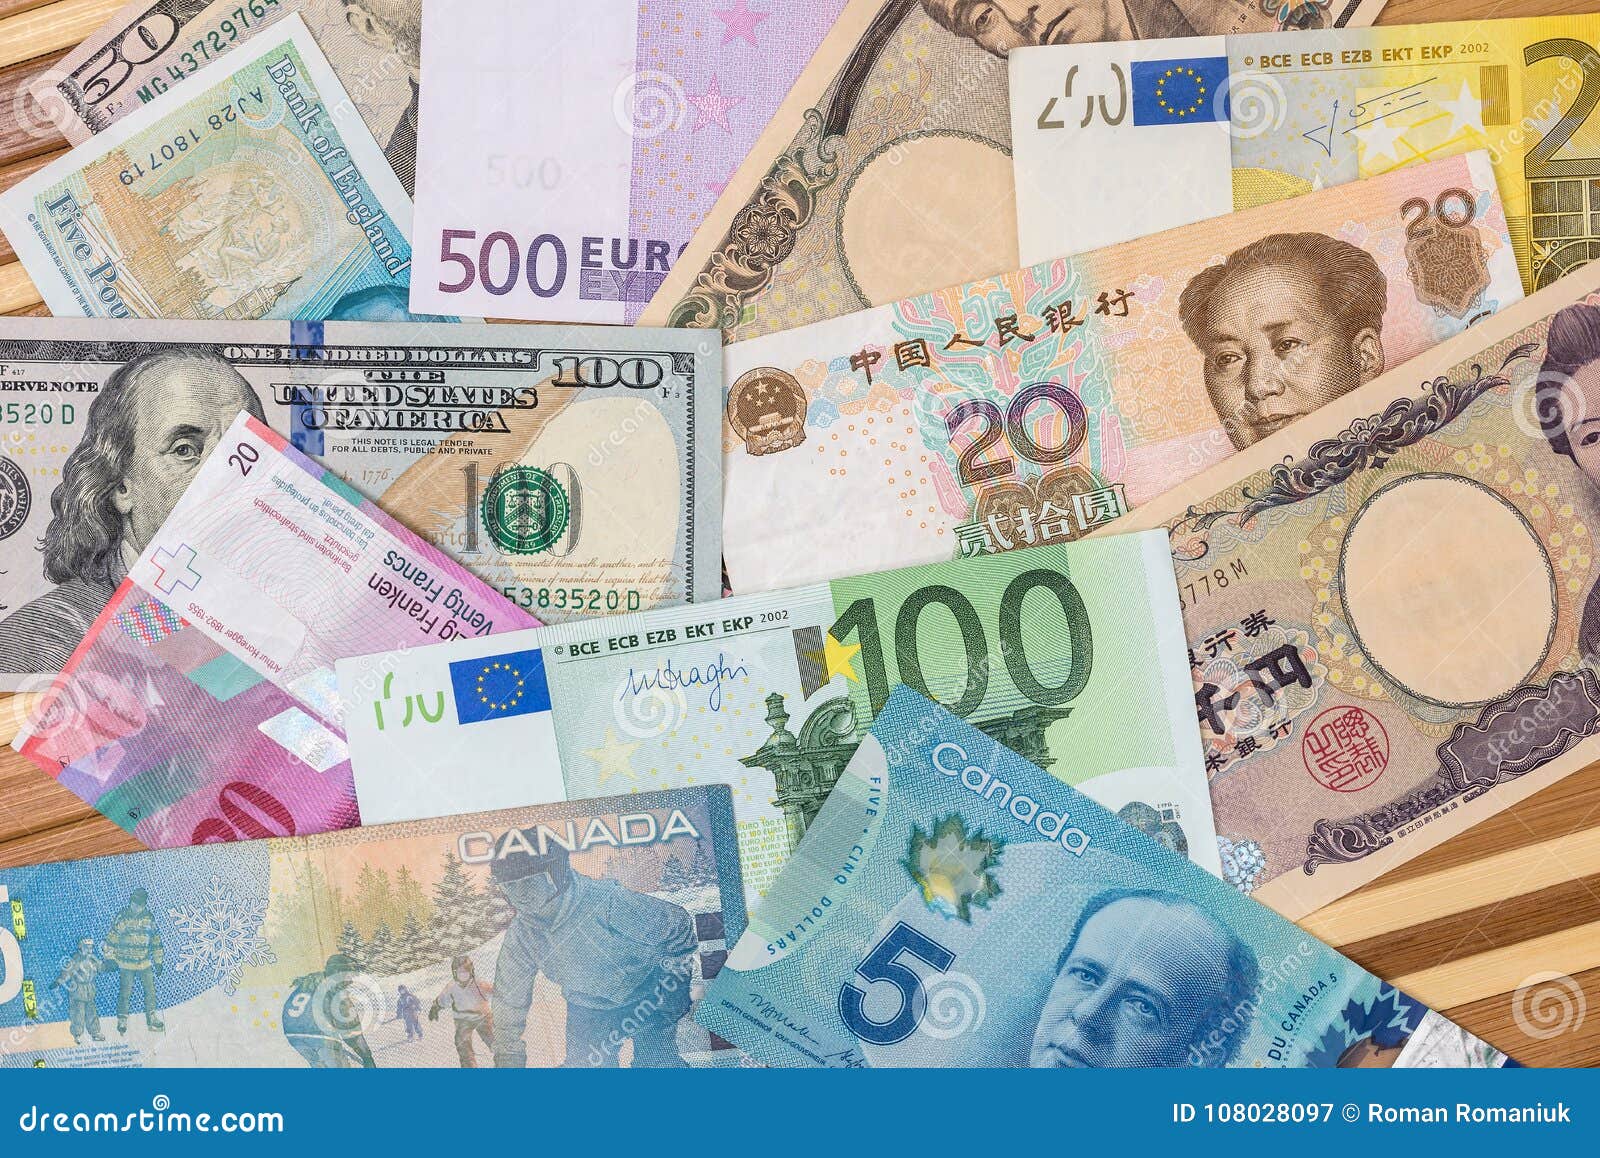 Евро доллар фунт стерлингов. Доллар евро юань. Доллар евро Франк. Доллары, иены, фунты стерлинги, евро.. Доллар евро фунт.